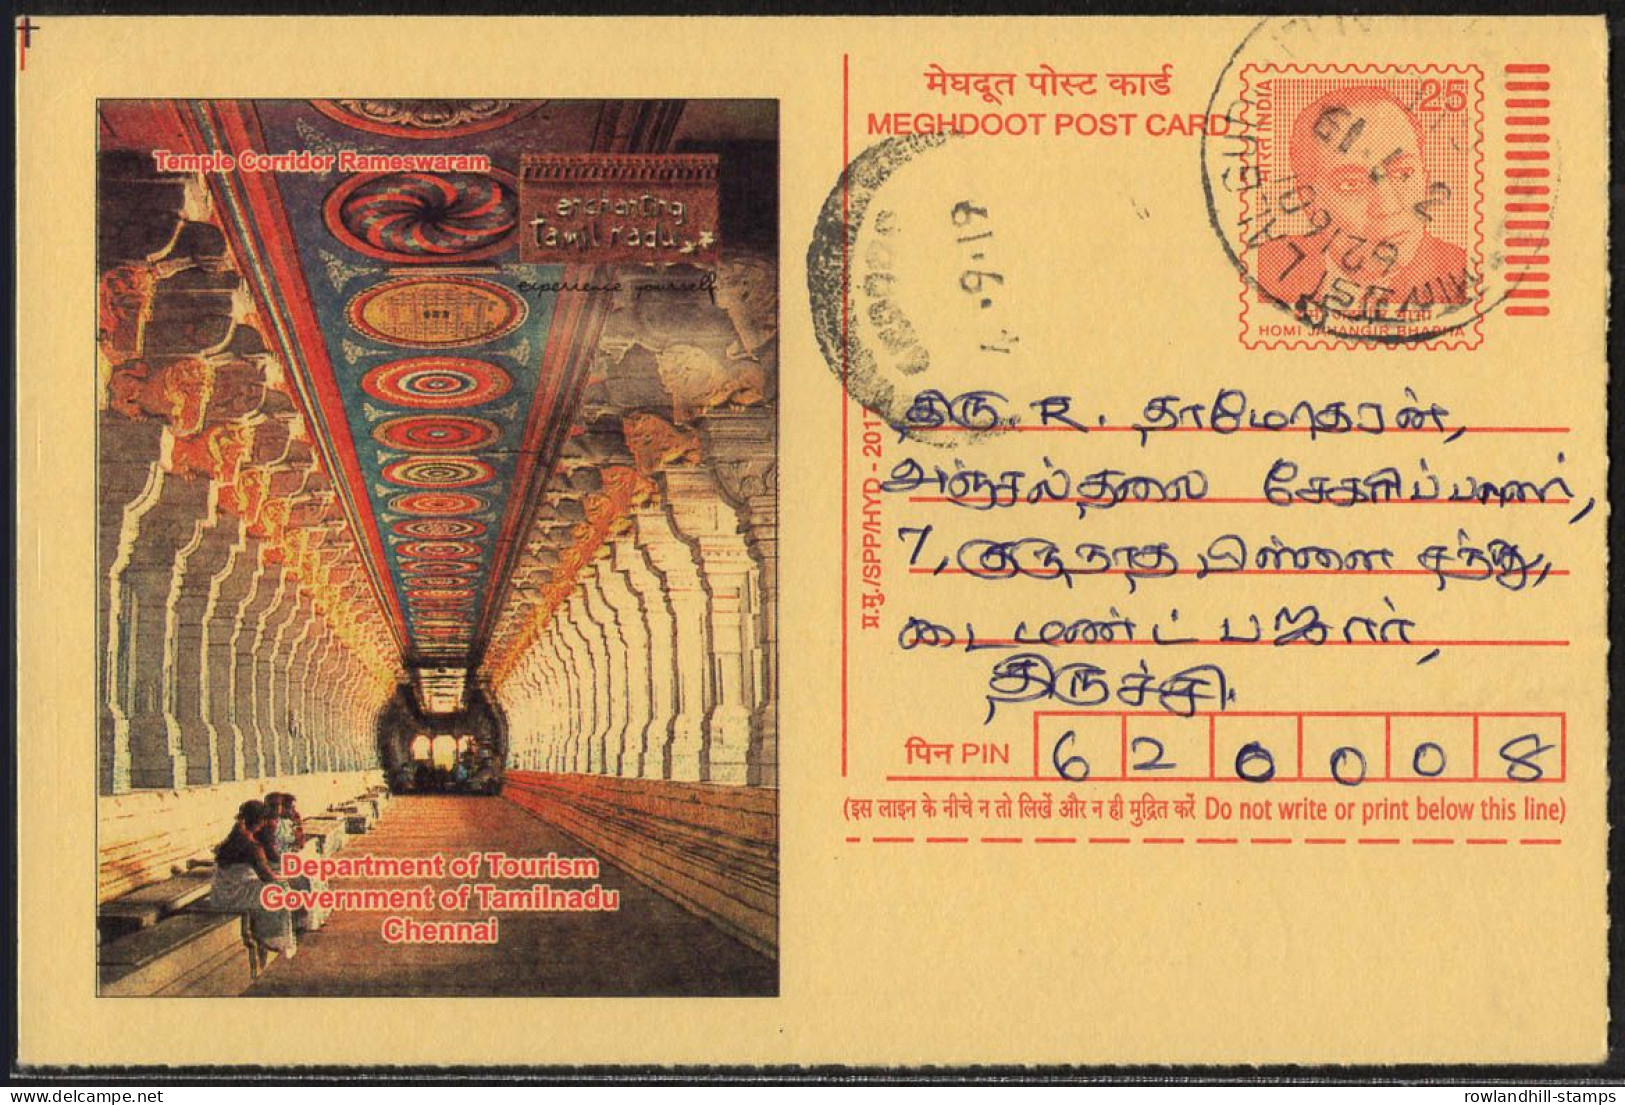 India, 2017, Temple Corridor RAMESWARAM, Meghdoot Post Card, Hinduism, Tourism, Tamilnadu, Architecture, Religion, A23 - Induismo